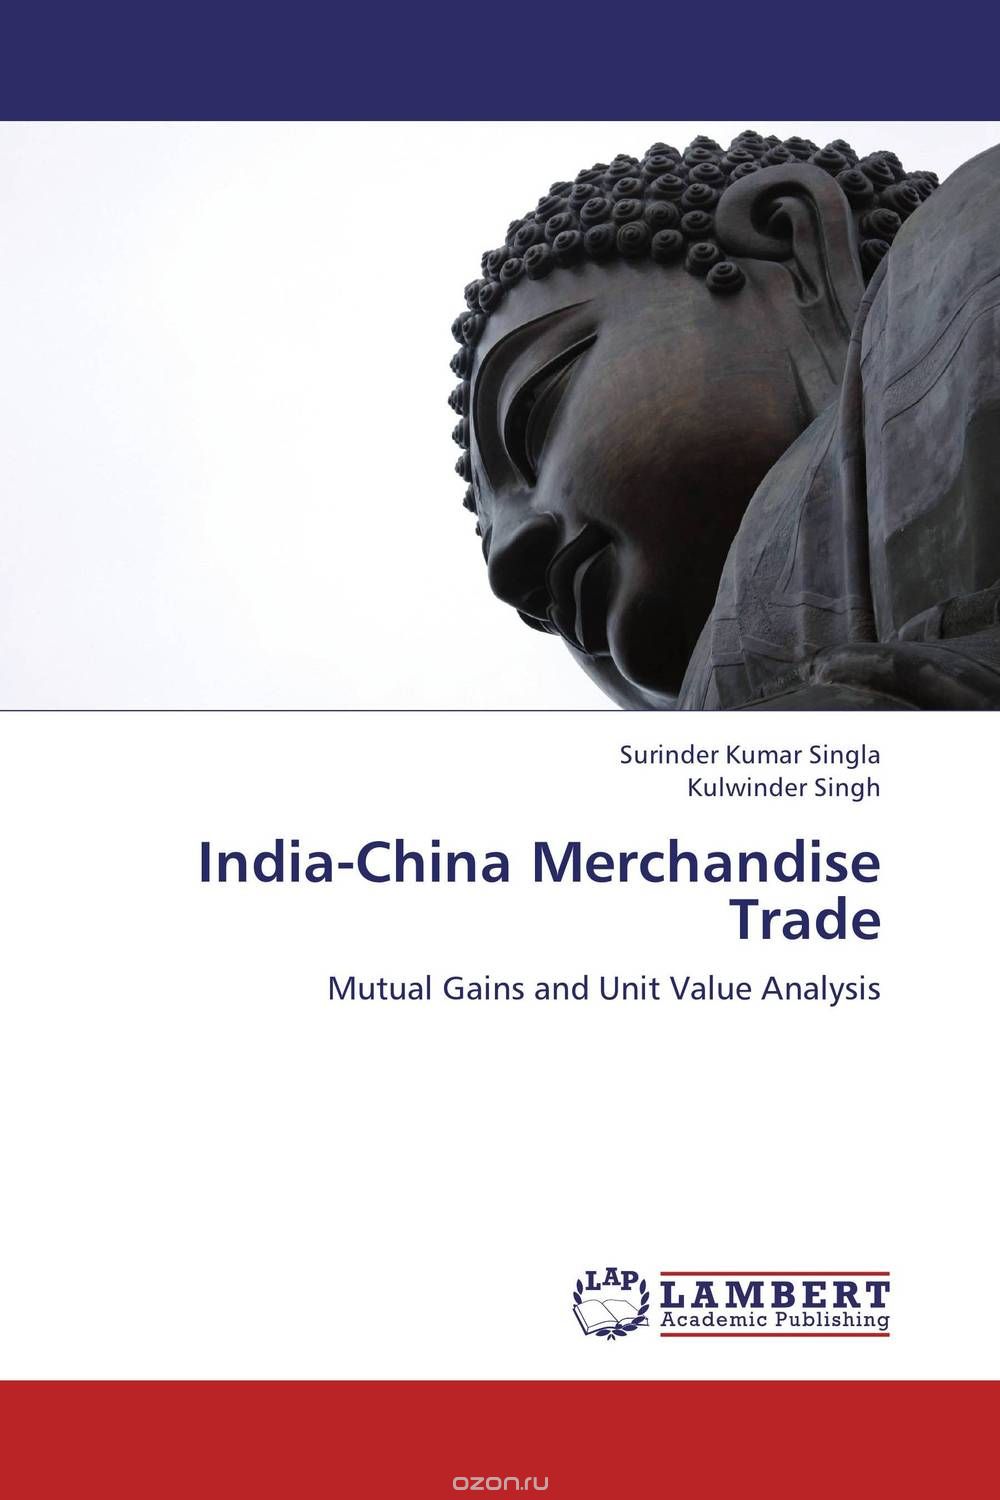 Скачать книгу "India-China Merchandise Trade"